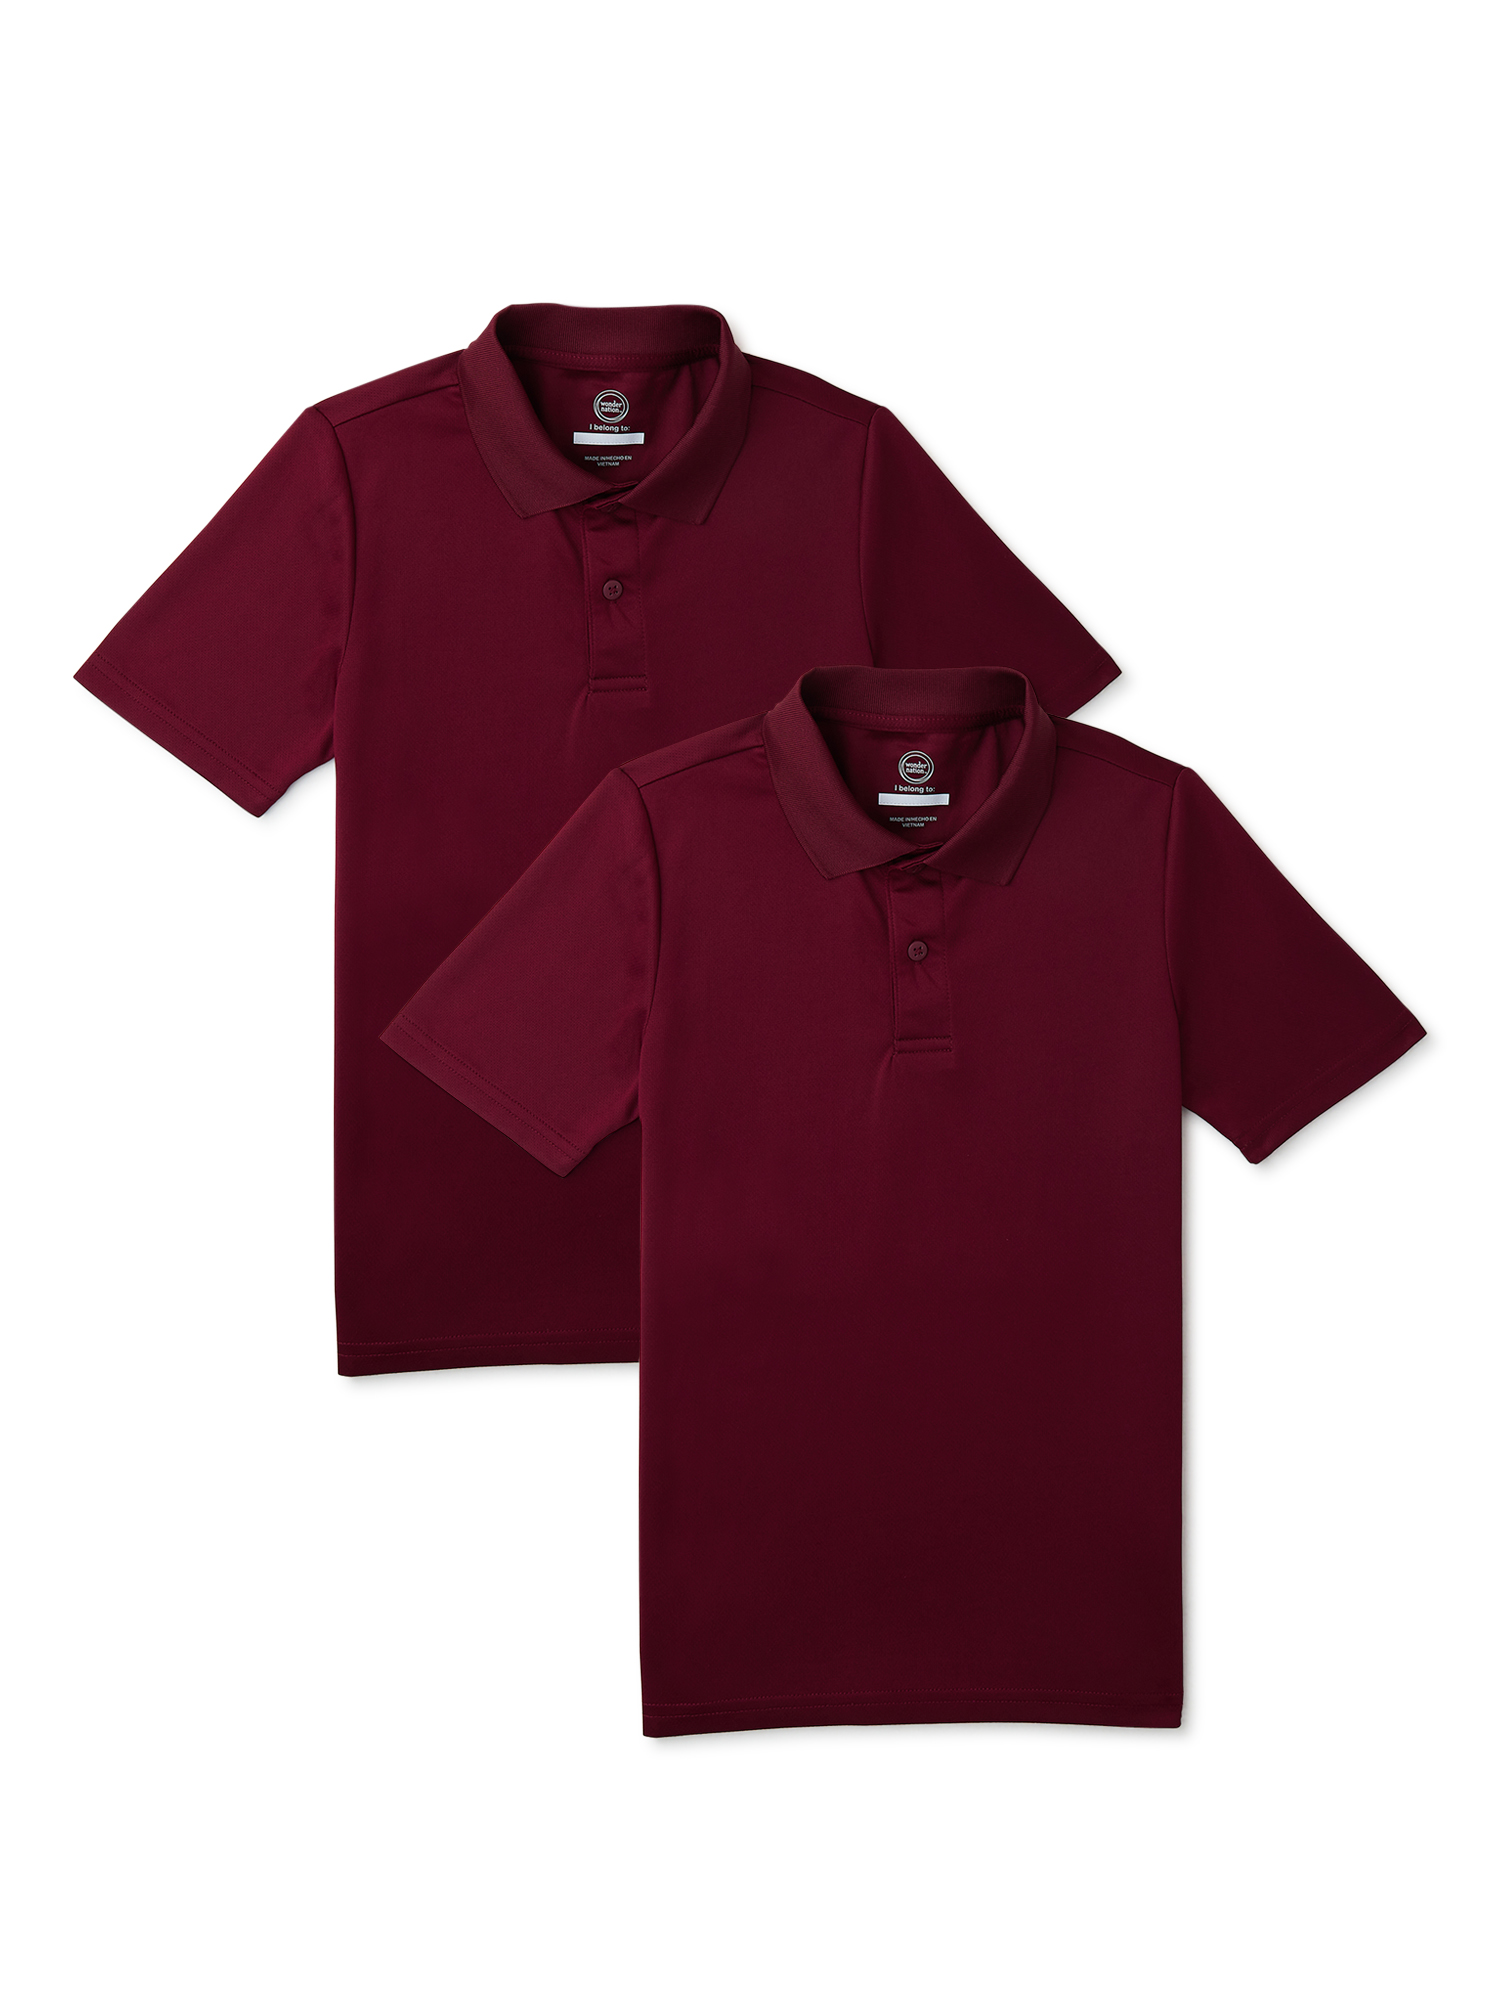 Wonder Nation Boys School Uniform Performance Polo Shirt, 2-Pack, Sizes 4-18